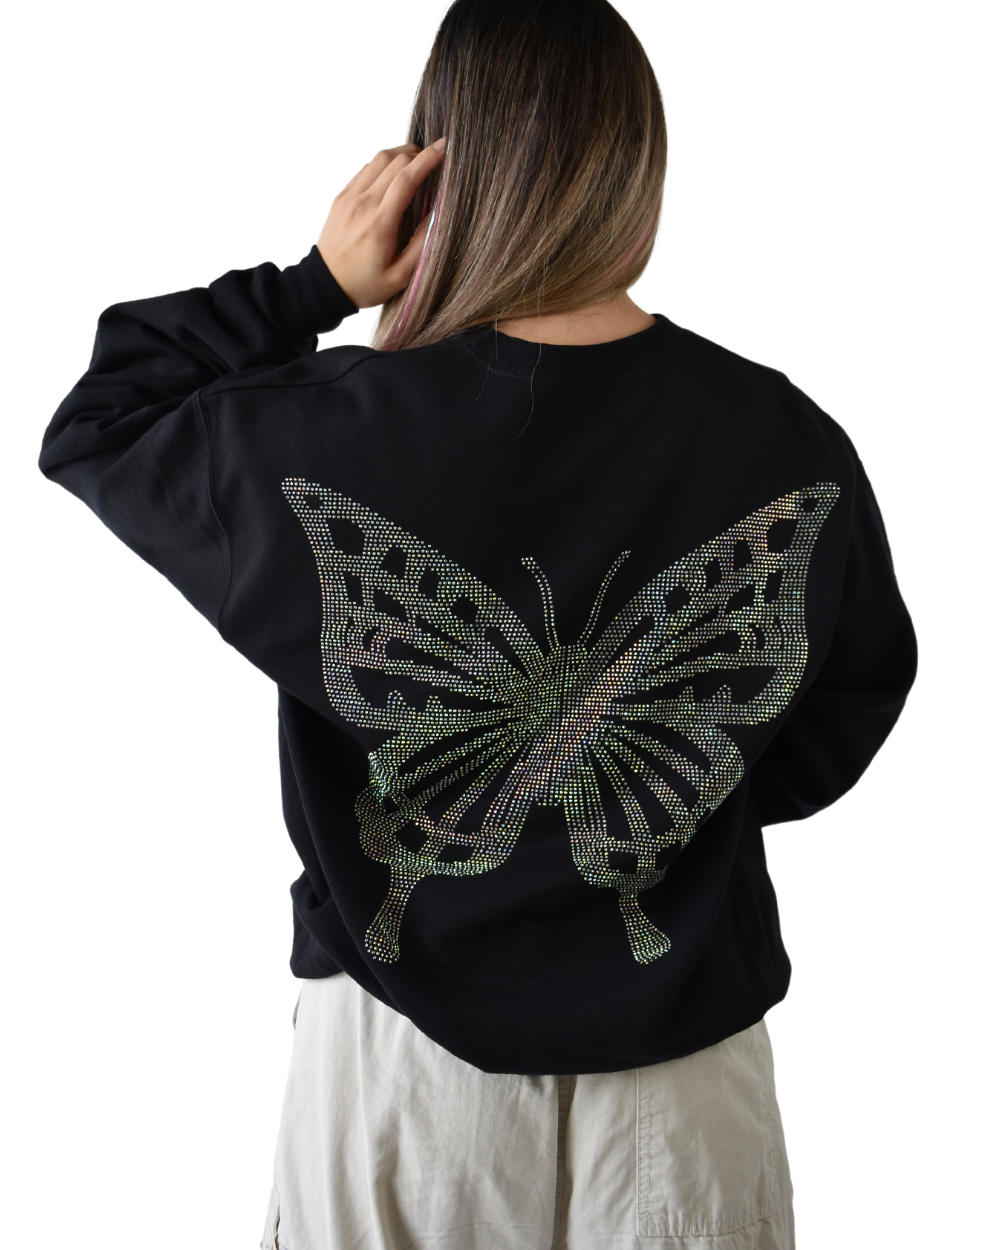 Collegiate Logo Butterfly Crewneck Sweatshirt - Lunautics Sweater